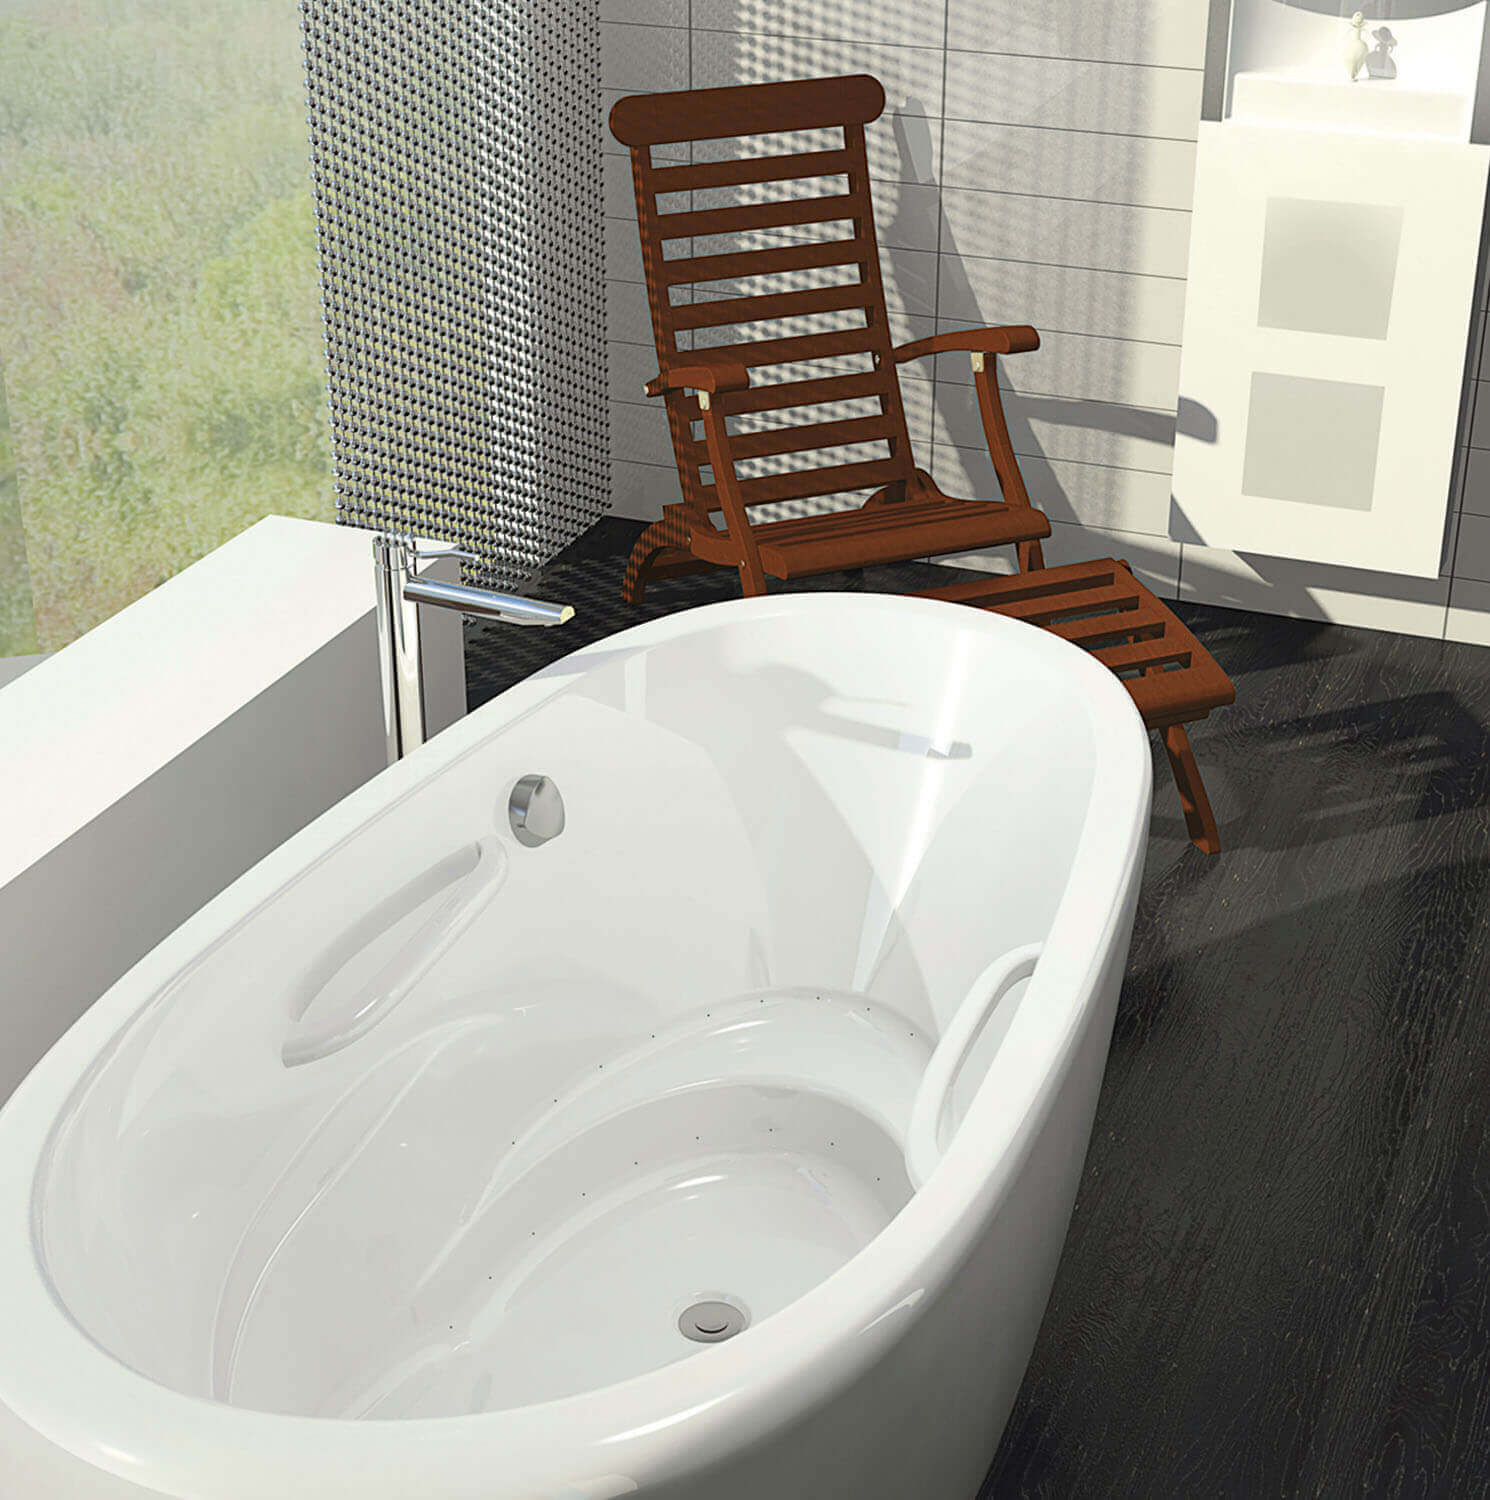 Bainultra Essencia Oval 7236 freestanding air jet bathtub for your modern bathroom